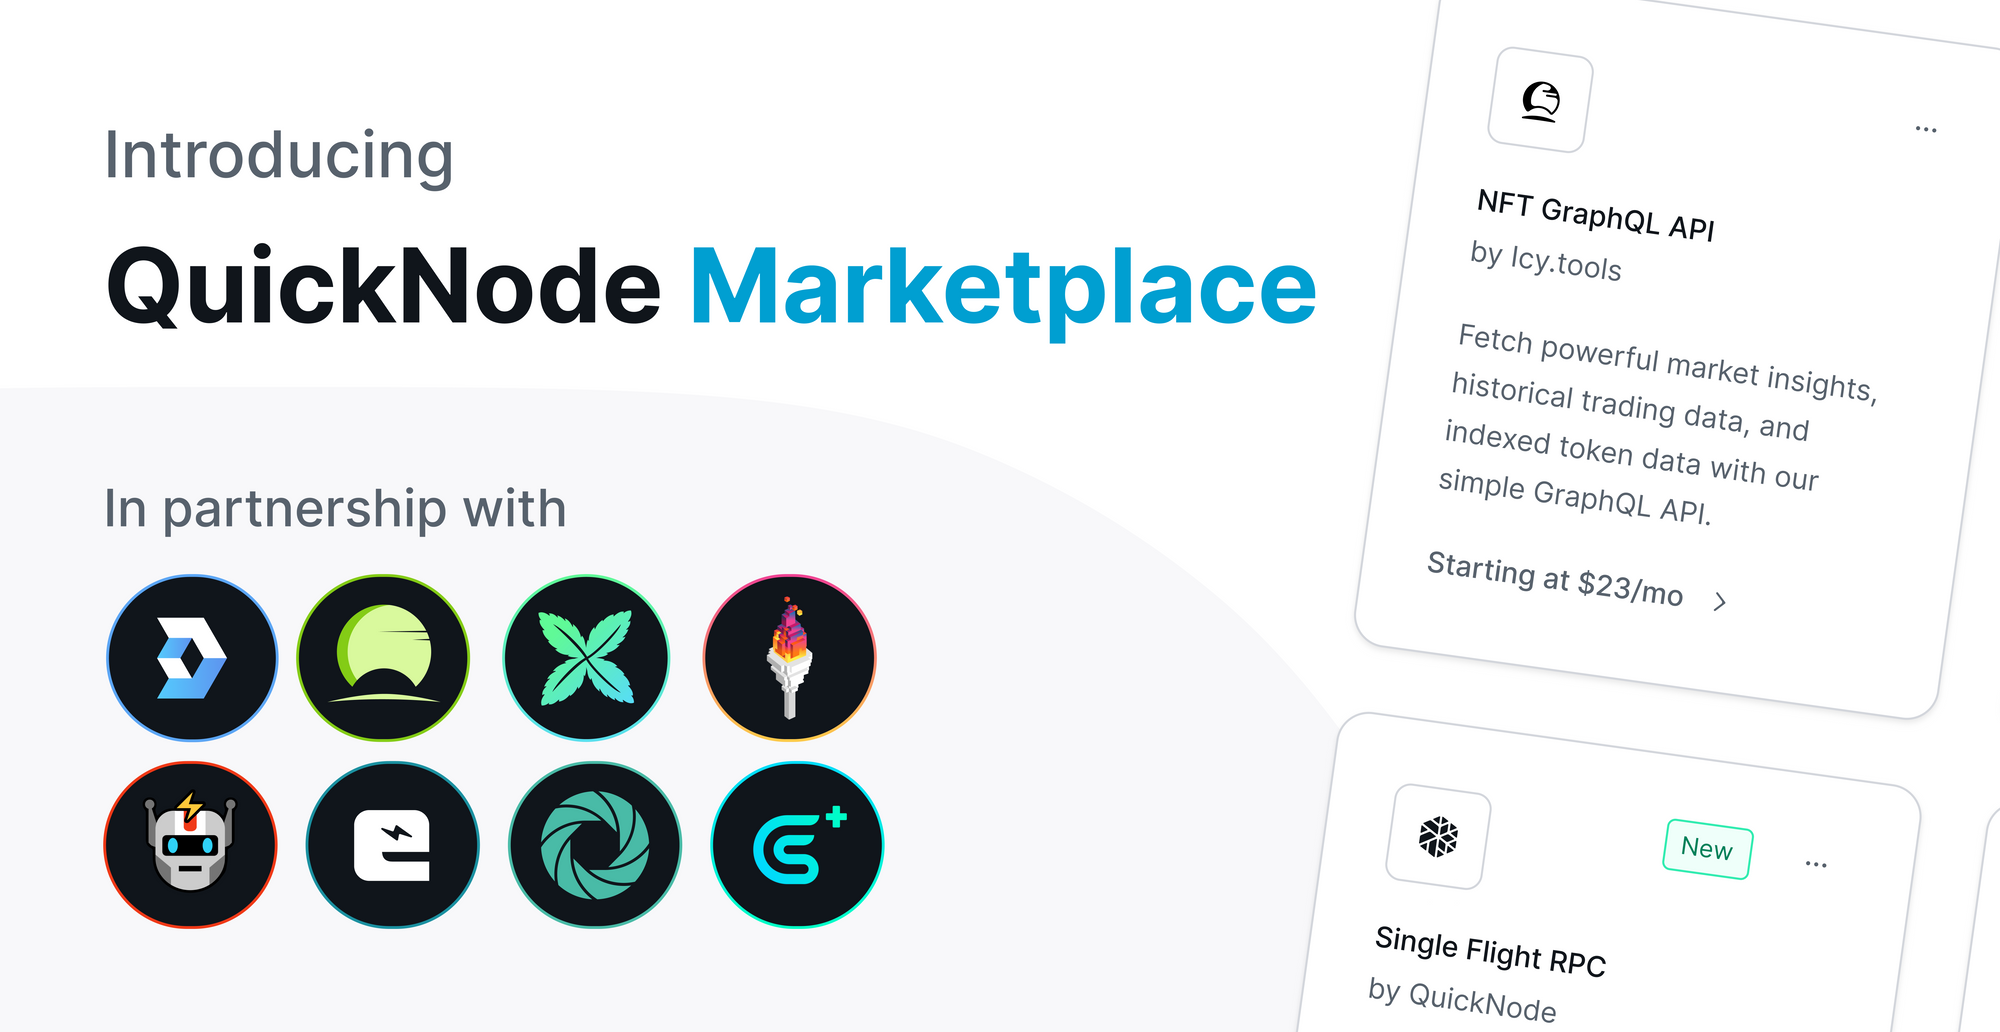 Introducing QuickNode Marketplace